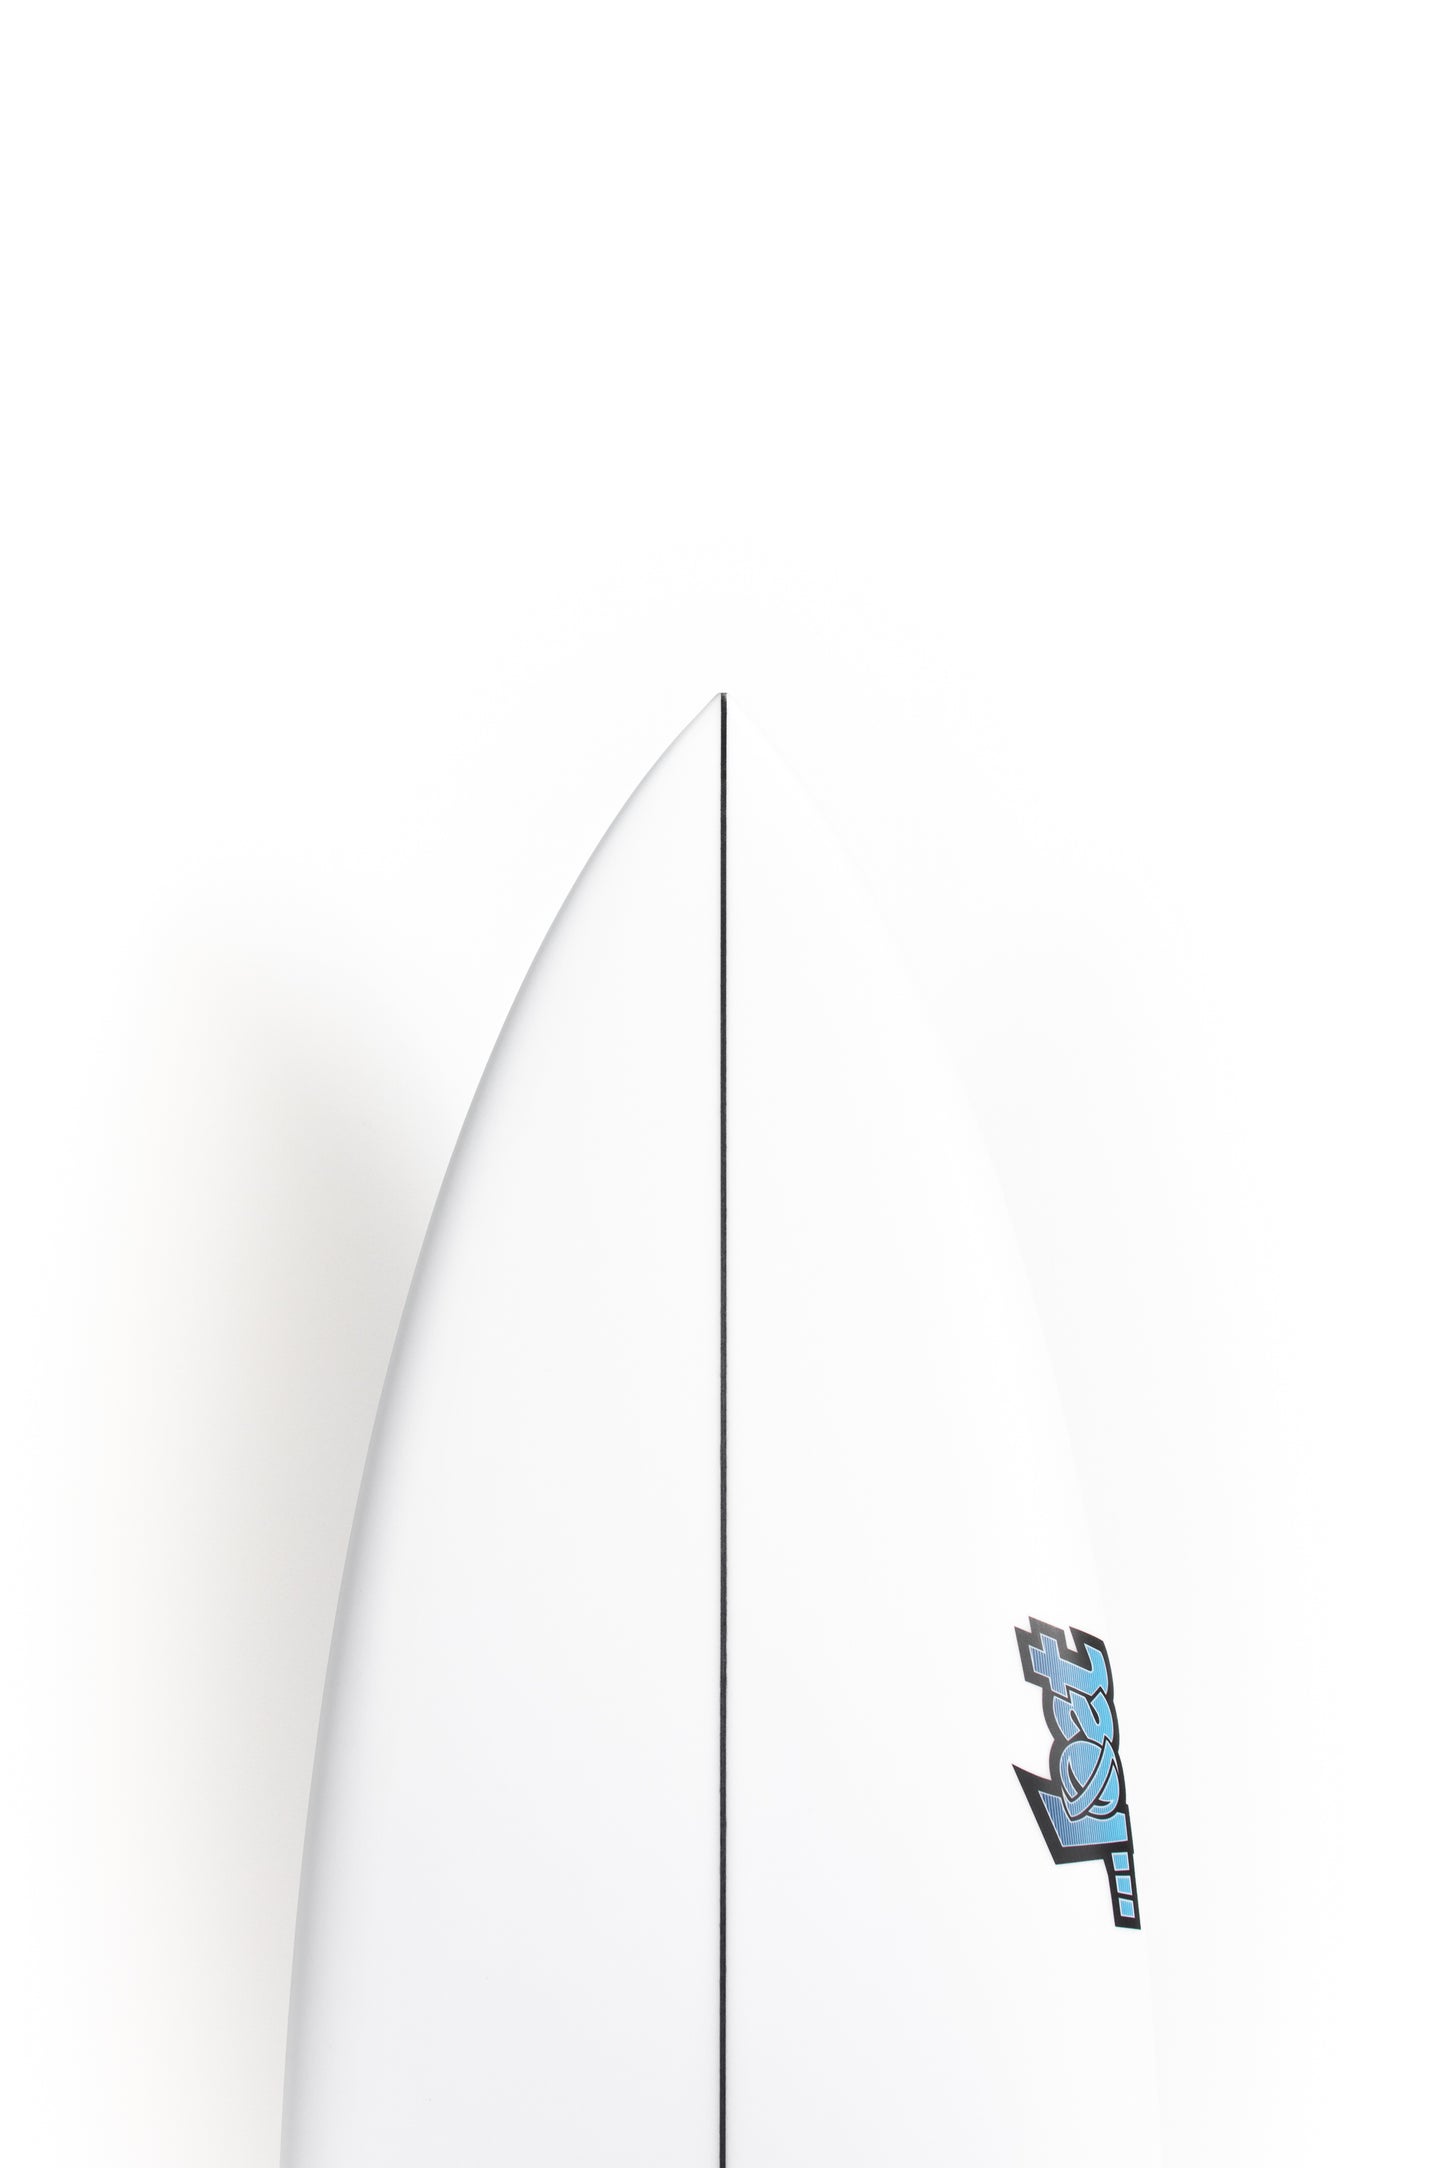 
                  
                    Pukas Surf Shop - Lost Surfboard - PUDDLE JUMPER-PRO by Matt Biolos - 6'0" x 20,5 x 2.6 x 34,55L - MH16658
                  
                